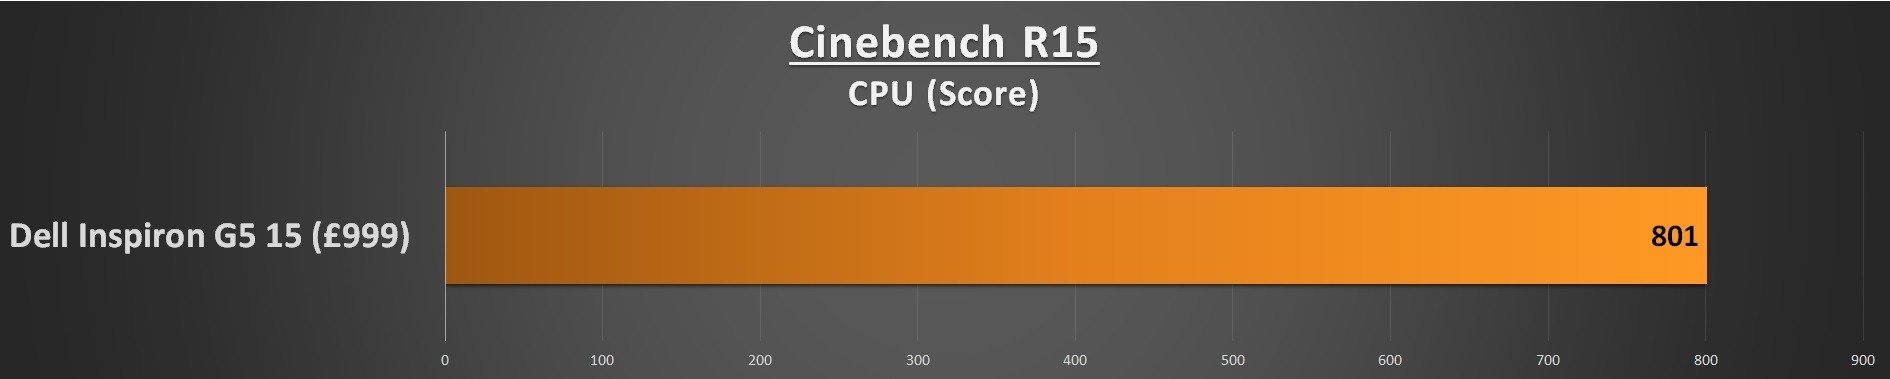 Dell Inspiron G5 15 Performance - Cinebench R15 CPU